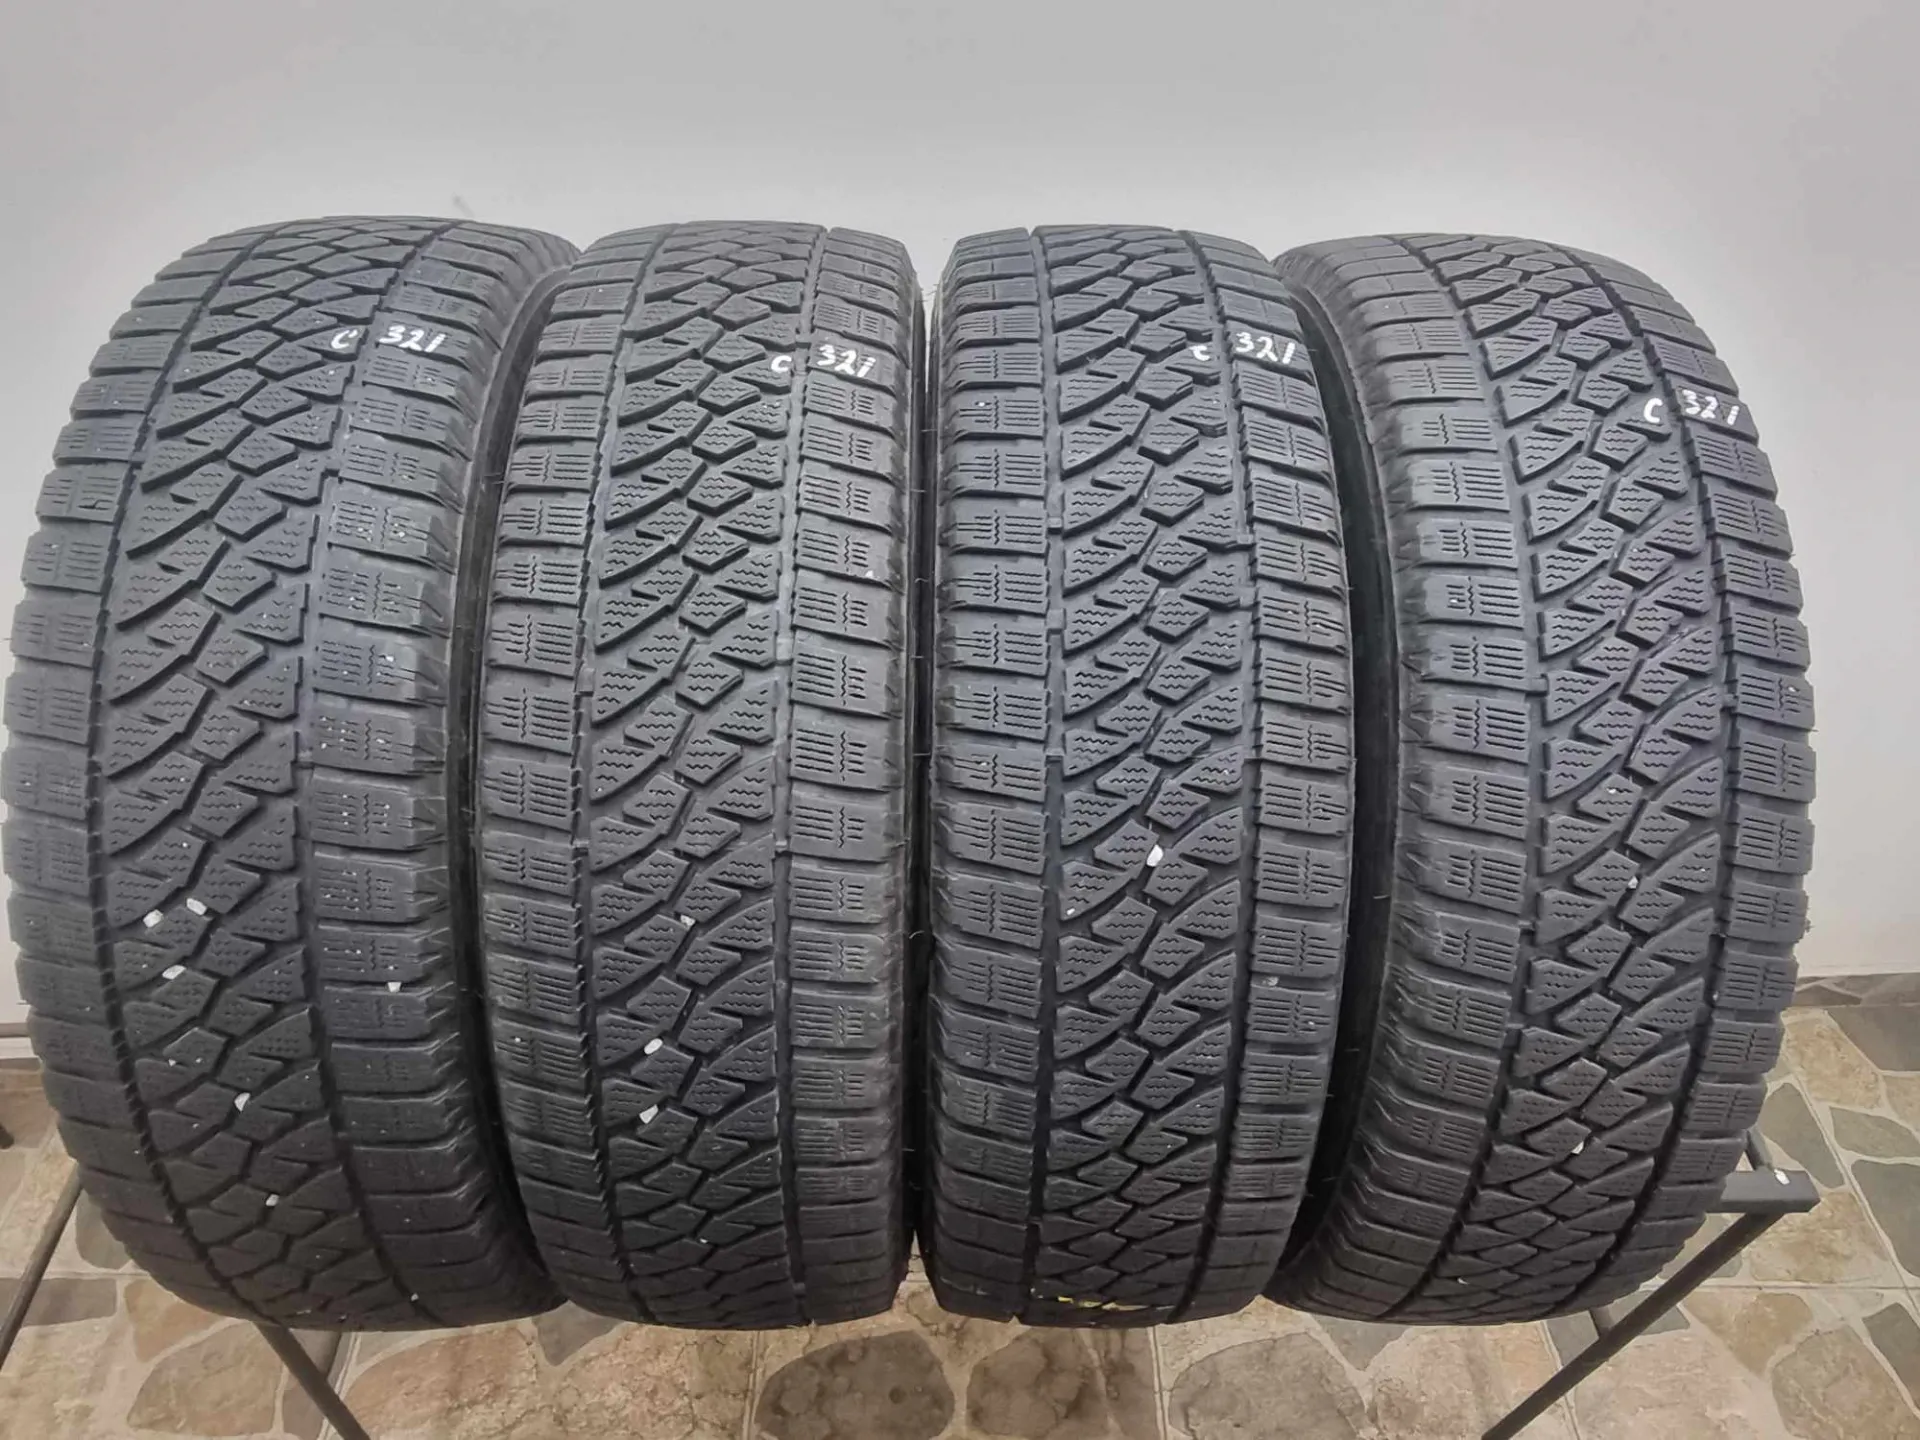 10бр зимни гуми за бус 205/65/16С Bridgestone C321 5